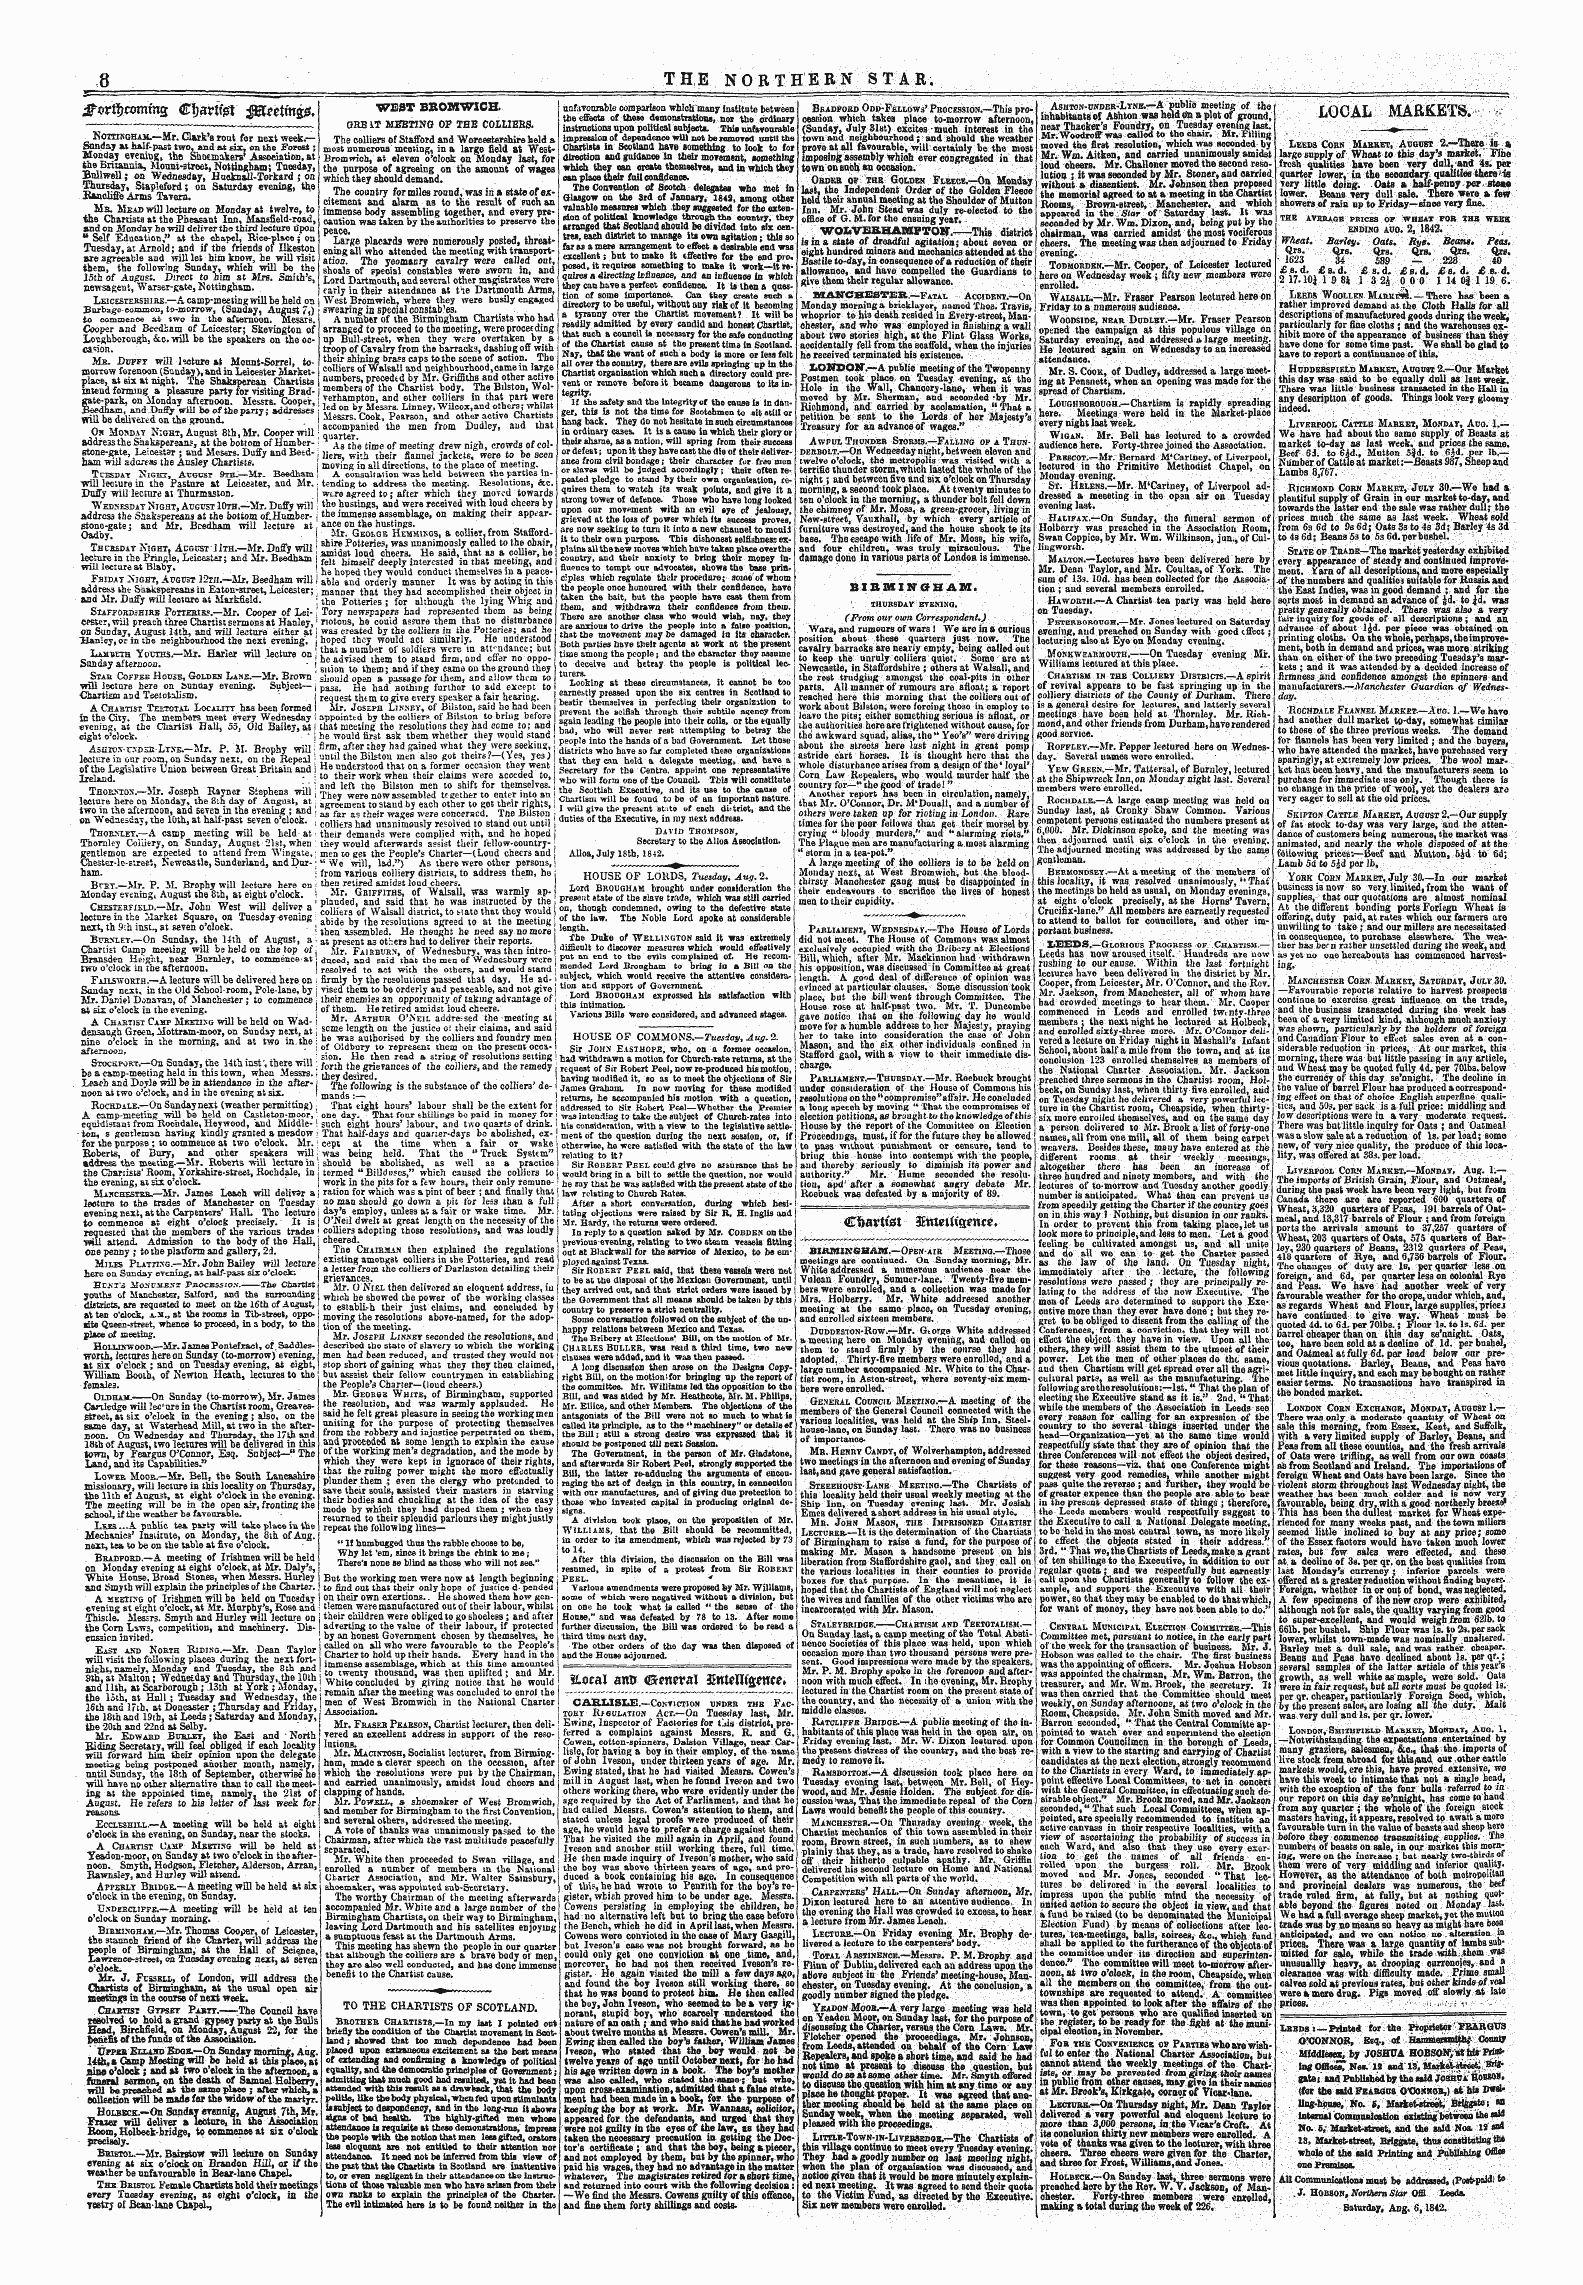 Northern Star (1837-1852): jS F Y, 5th edition - Ilccal Antr Central $Nuntonte»